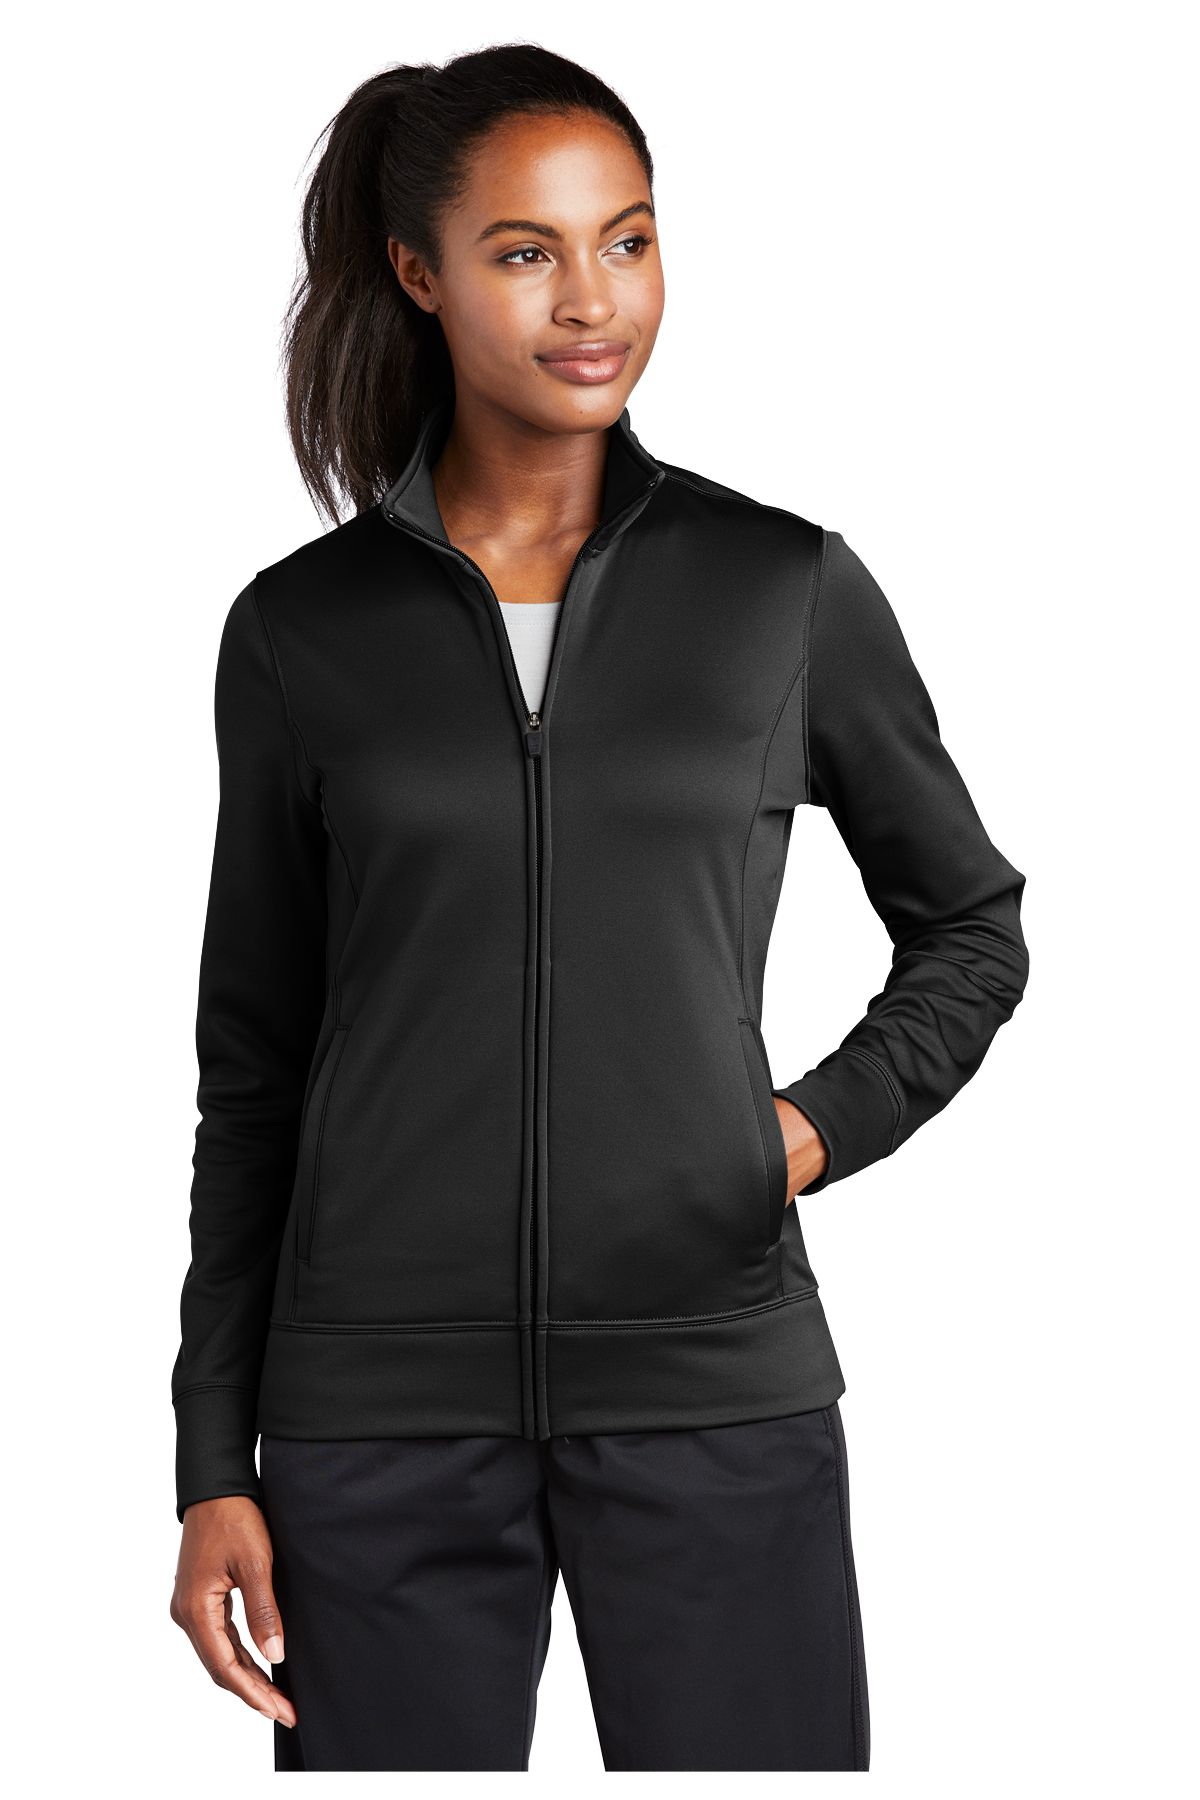 Sport-Tek Ladies Sport-Wick Fleece Full-Zip Jacket | Product | Sport-Tek